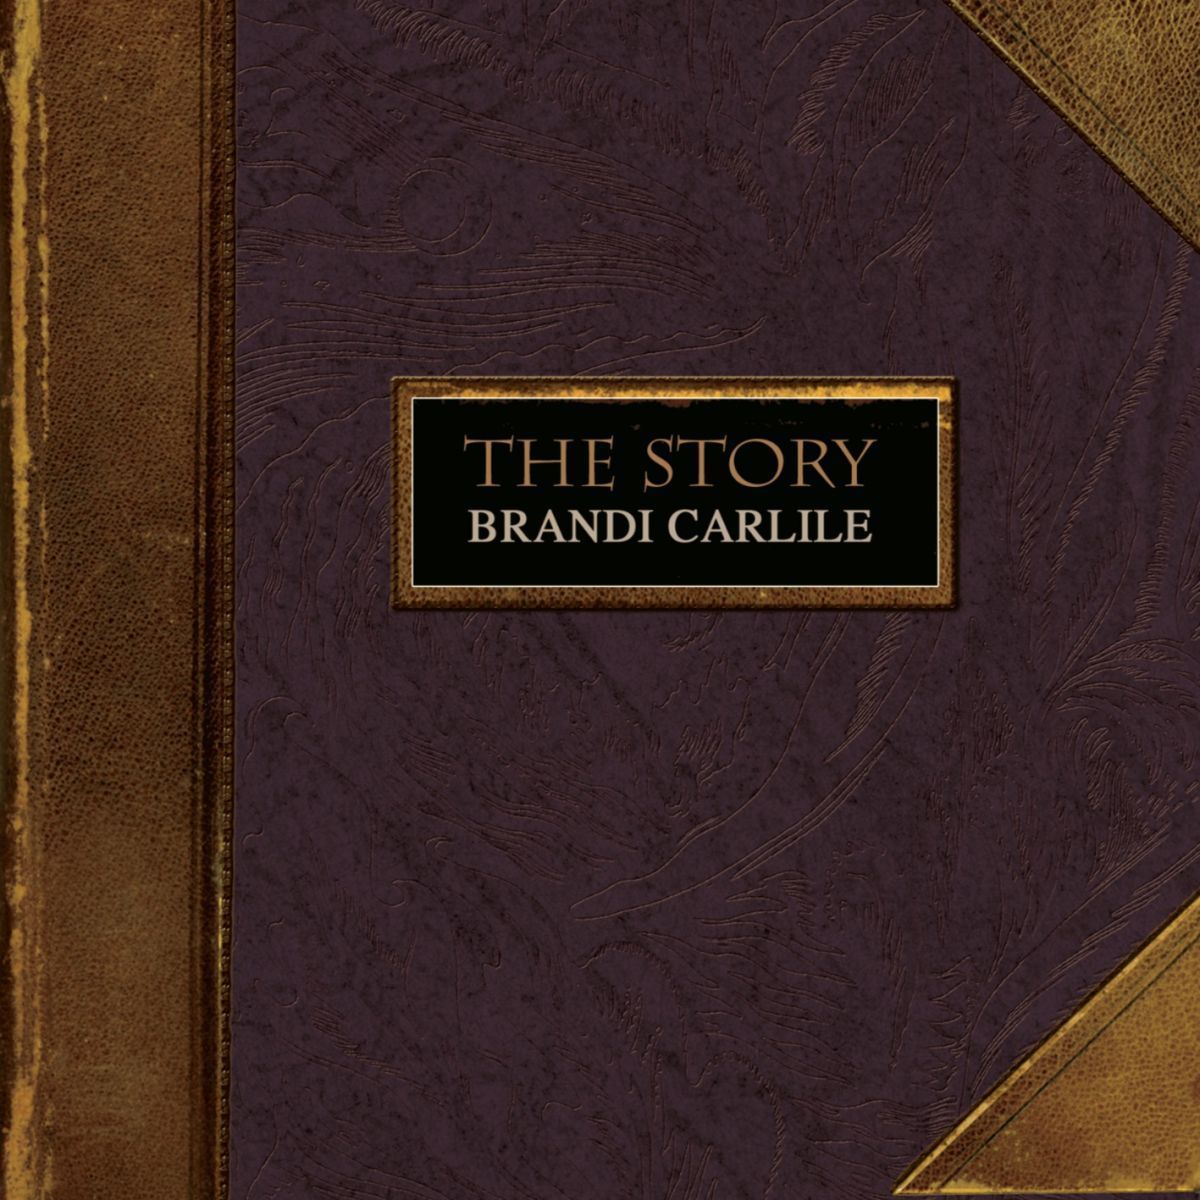 The Story (album) by Brandi Carlile